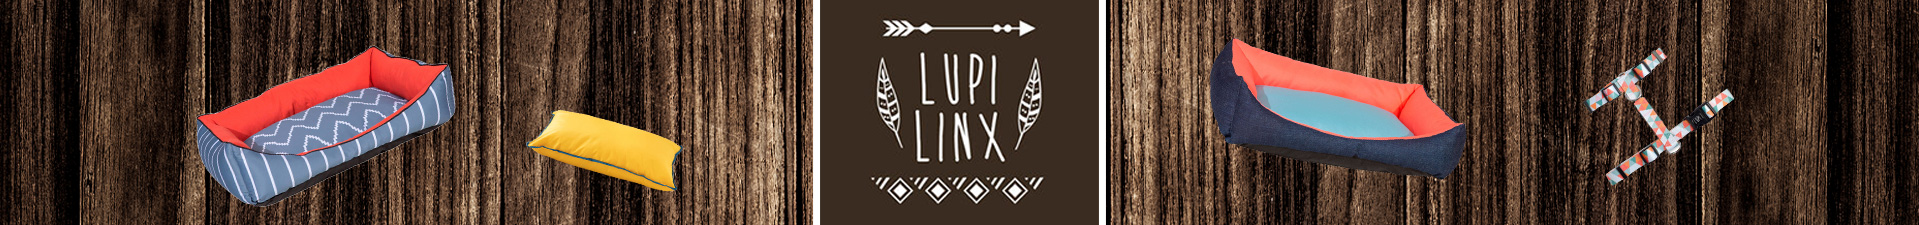 Lupi Linx